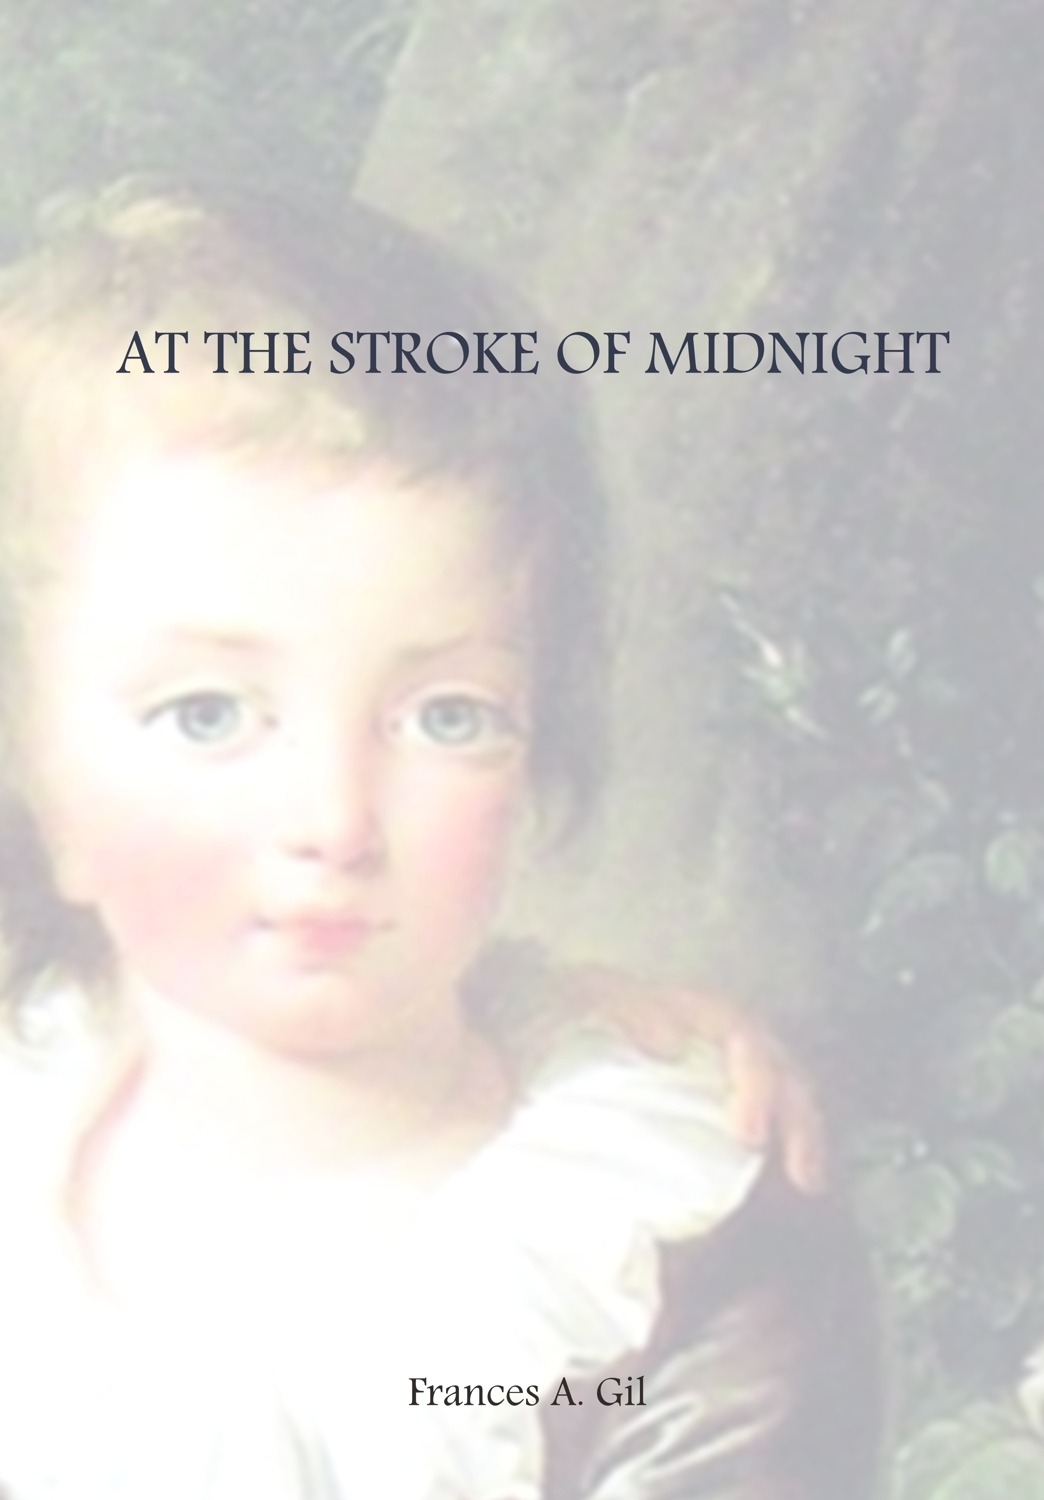 copertina at the stroke of midnight03